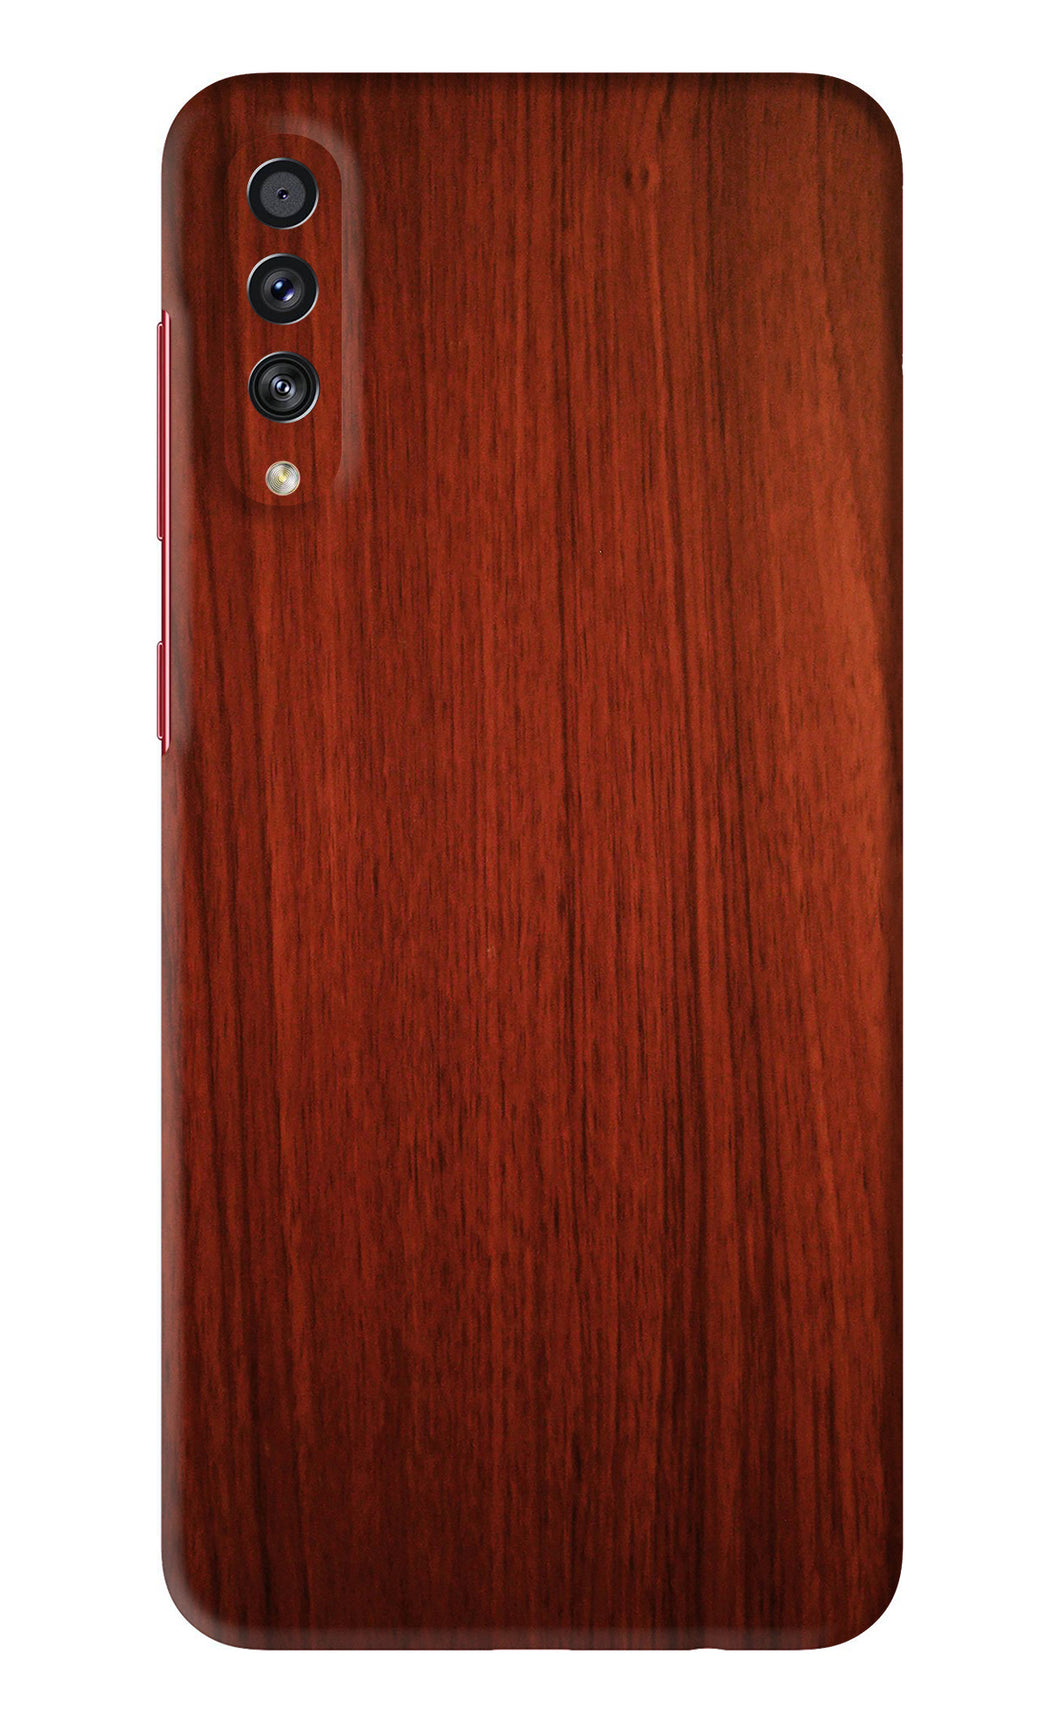 Wooden Plain Pattern Samsung Galaxy A70S Back Skin Wrap